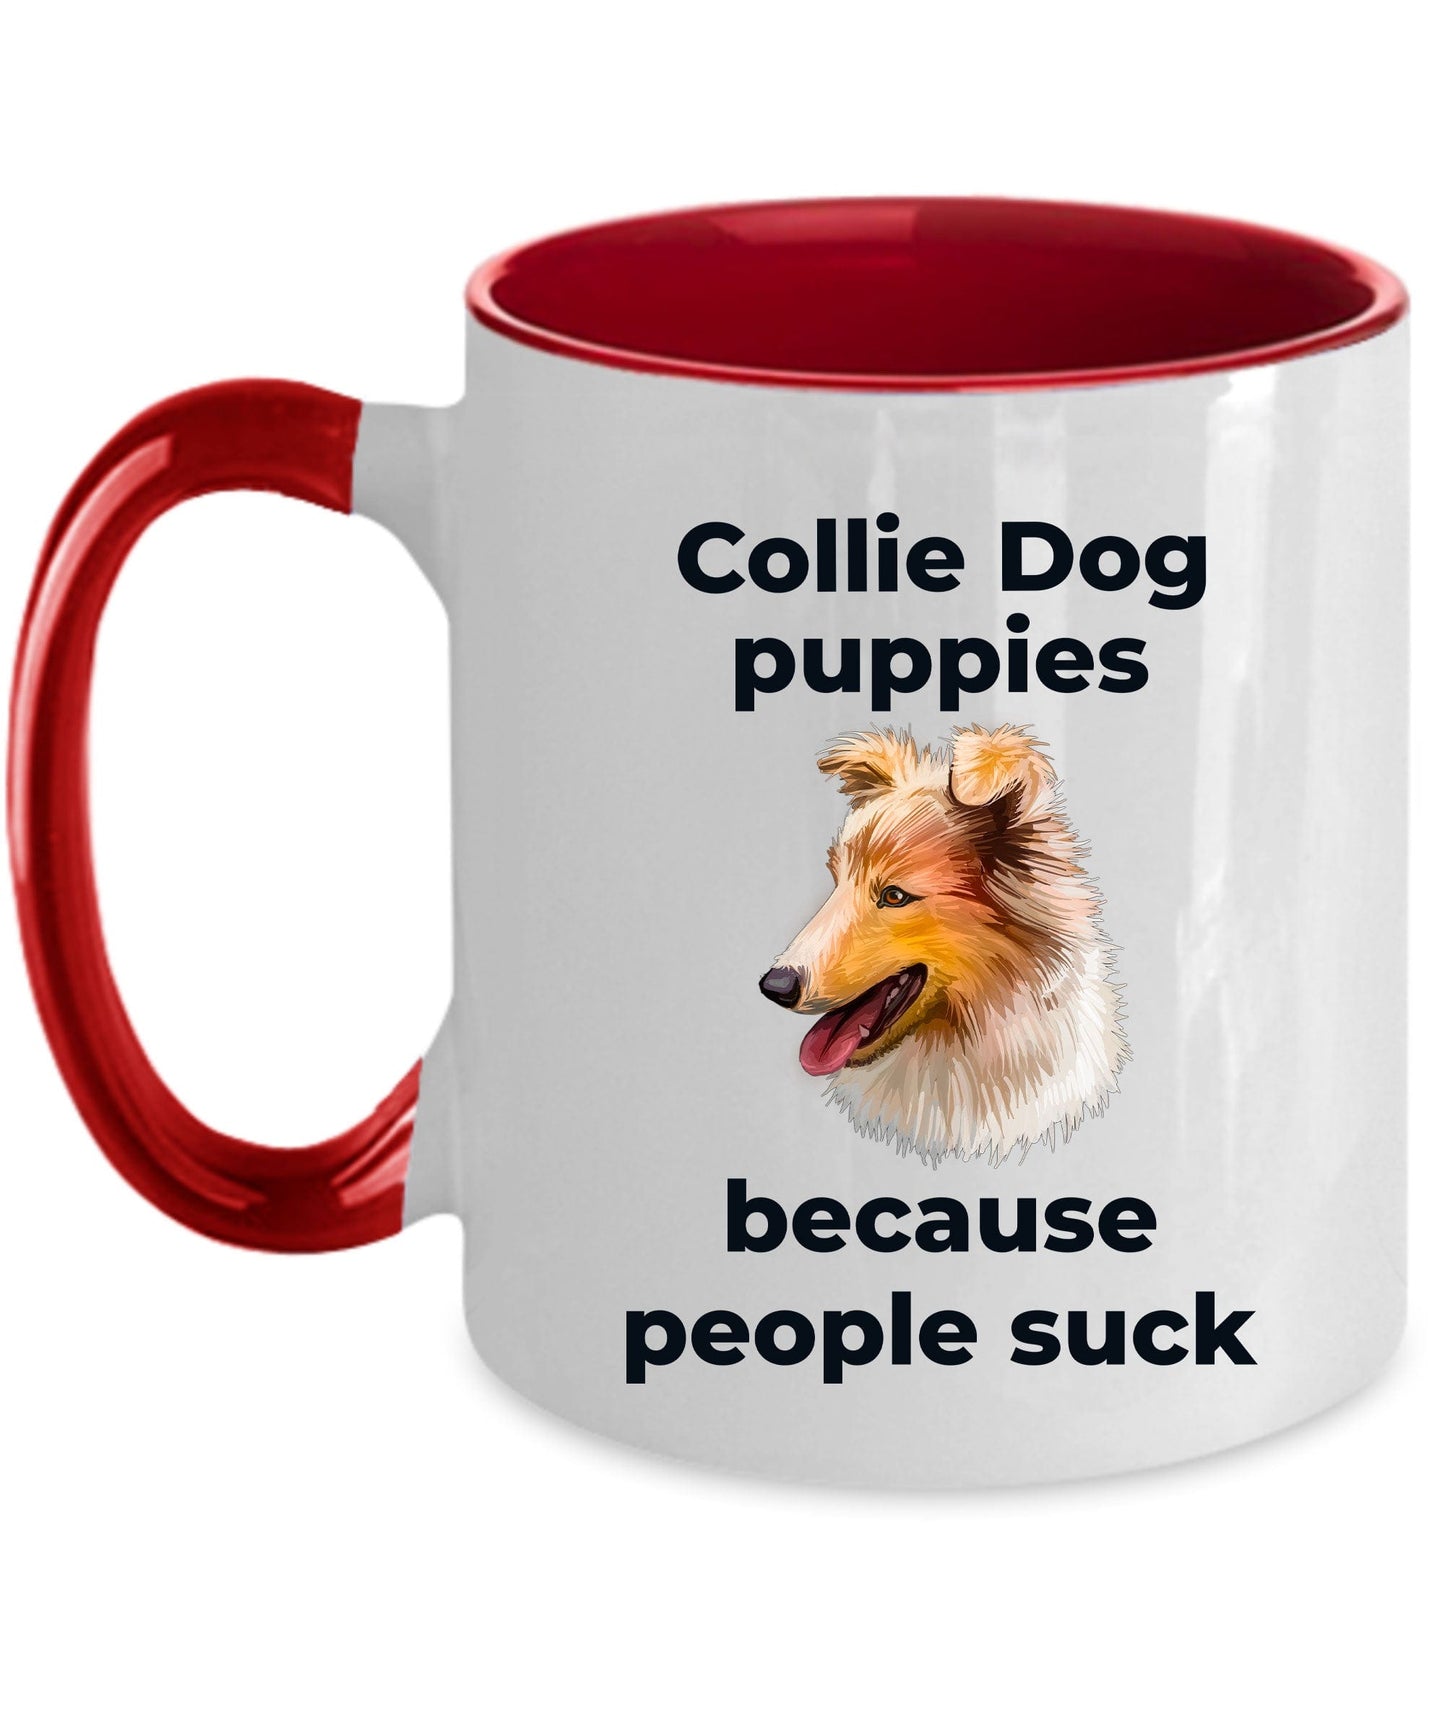 Collie Dog Ceramic Coffee Mug - Collie puppies because puppies suck